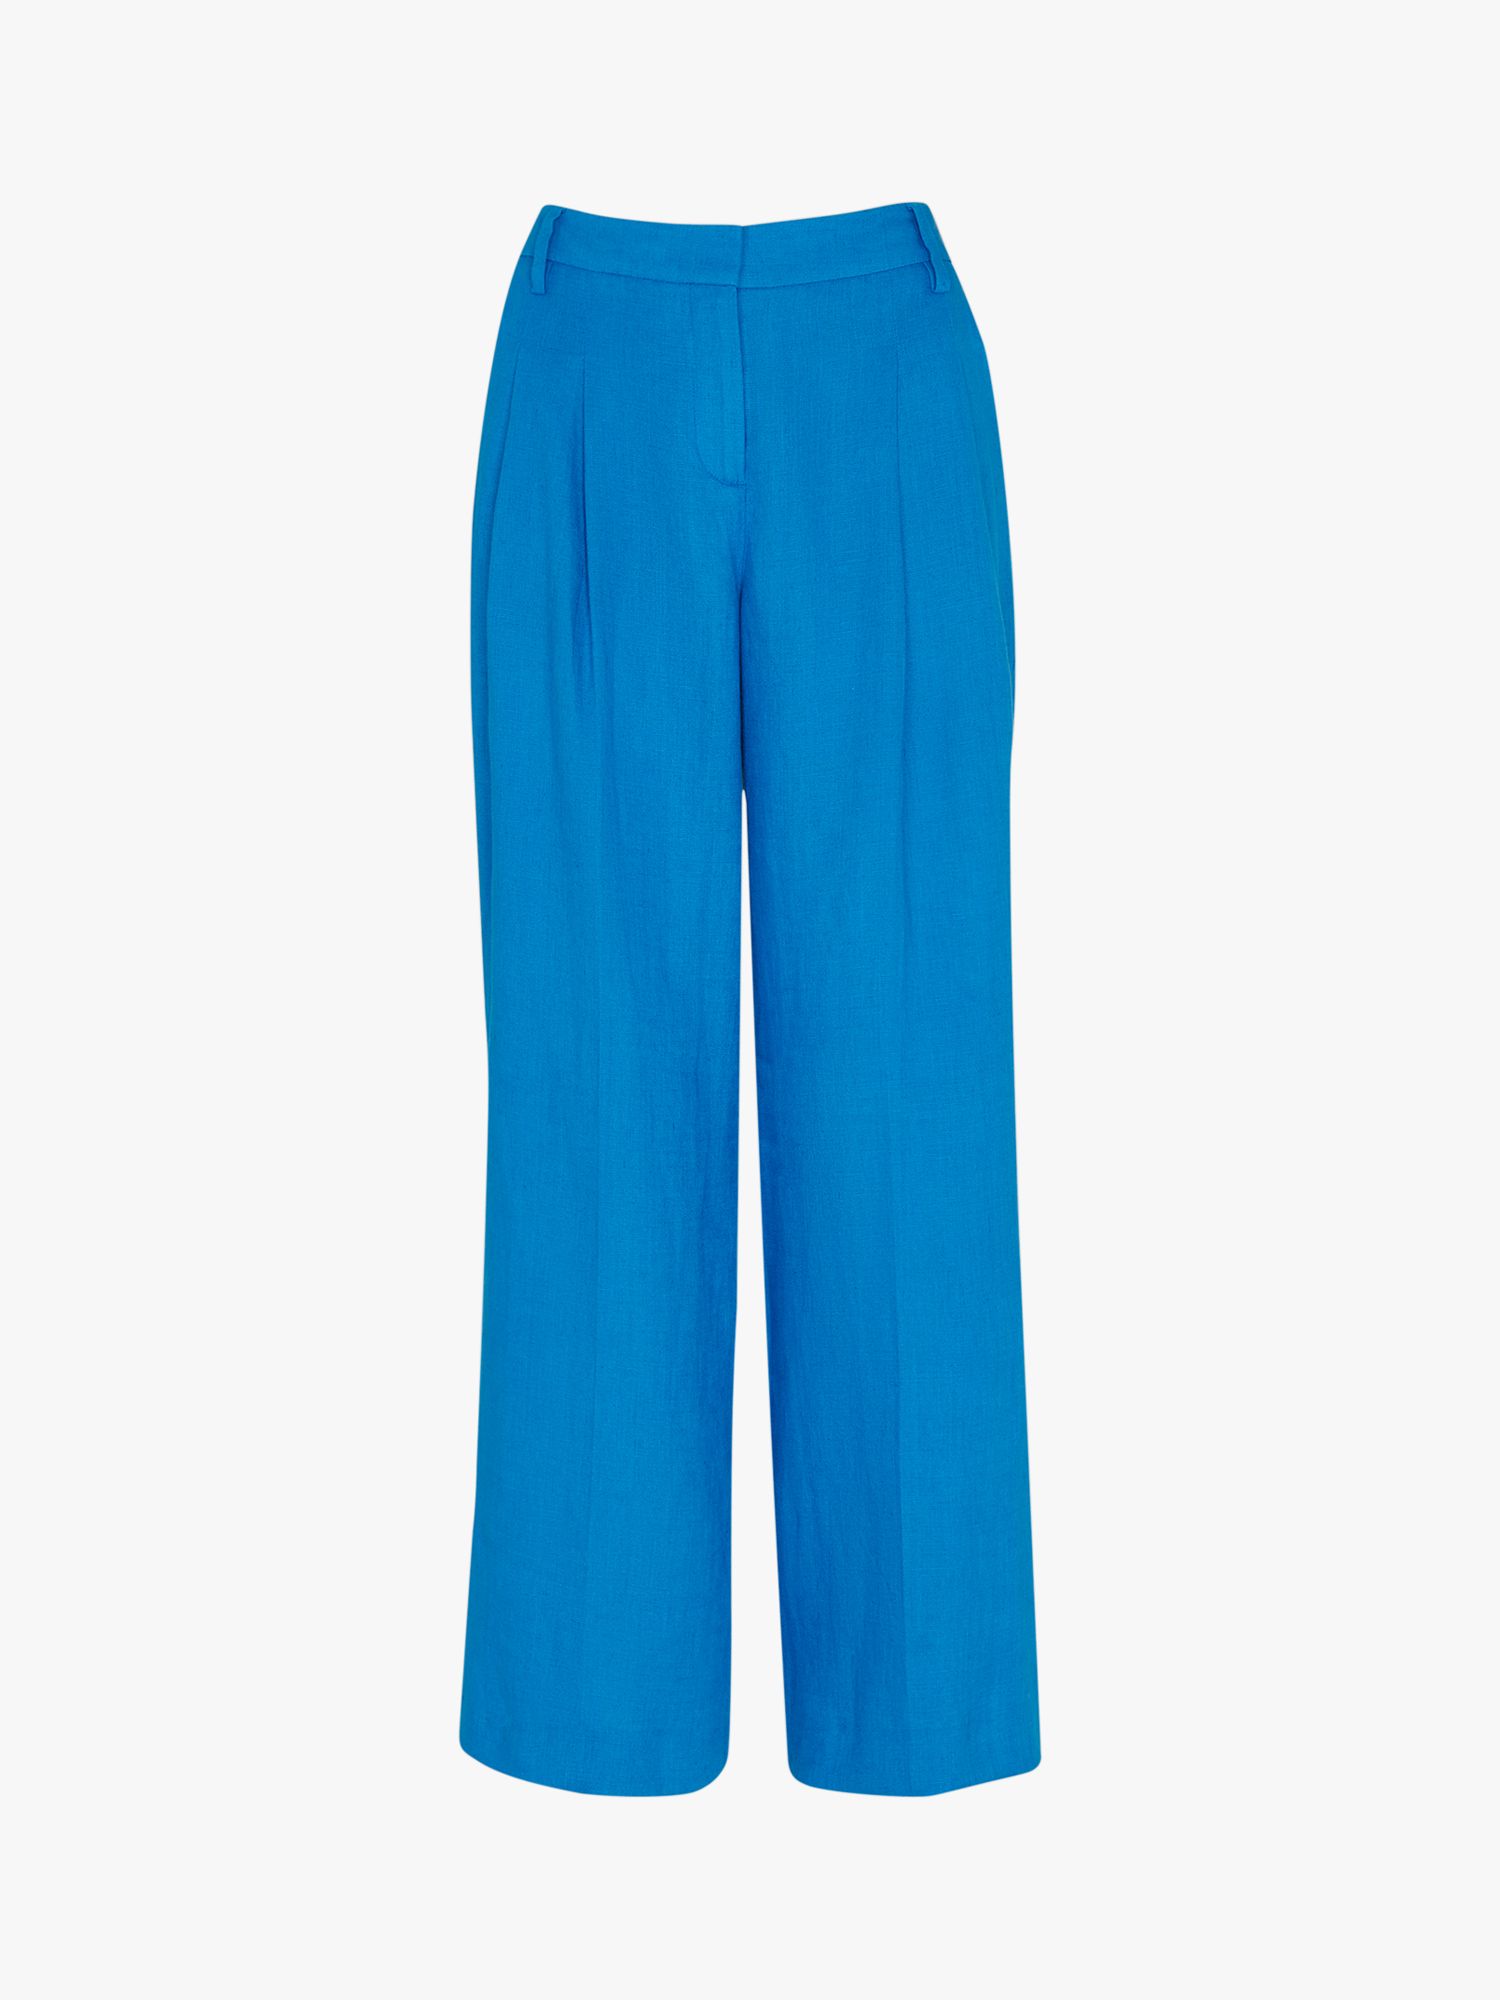 Whistles Petite Leonie Linen Trousers, Blue at John Lewis & Partners